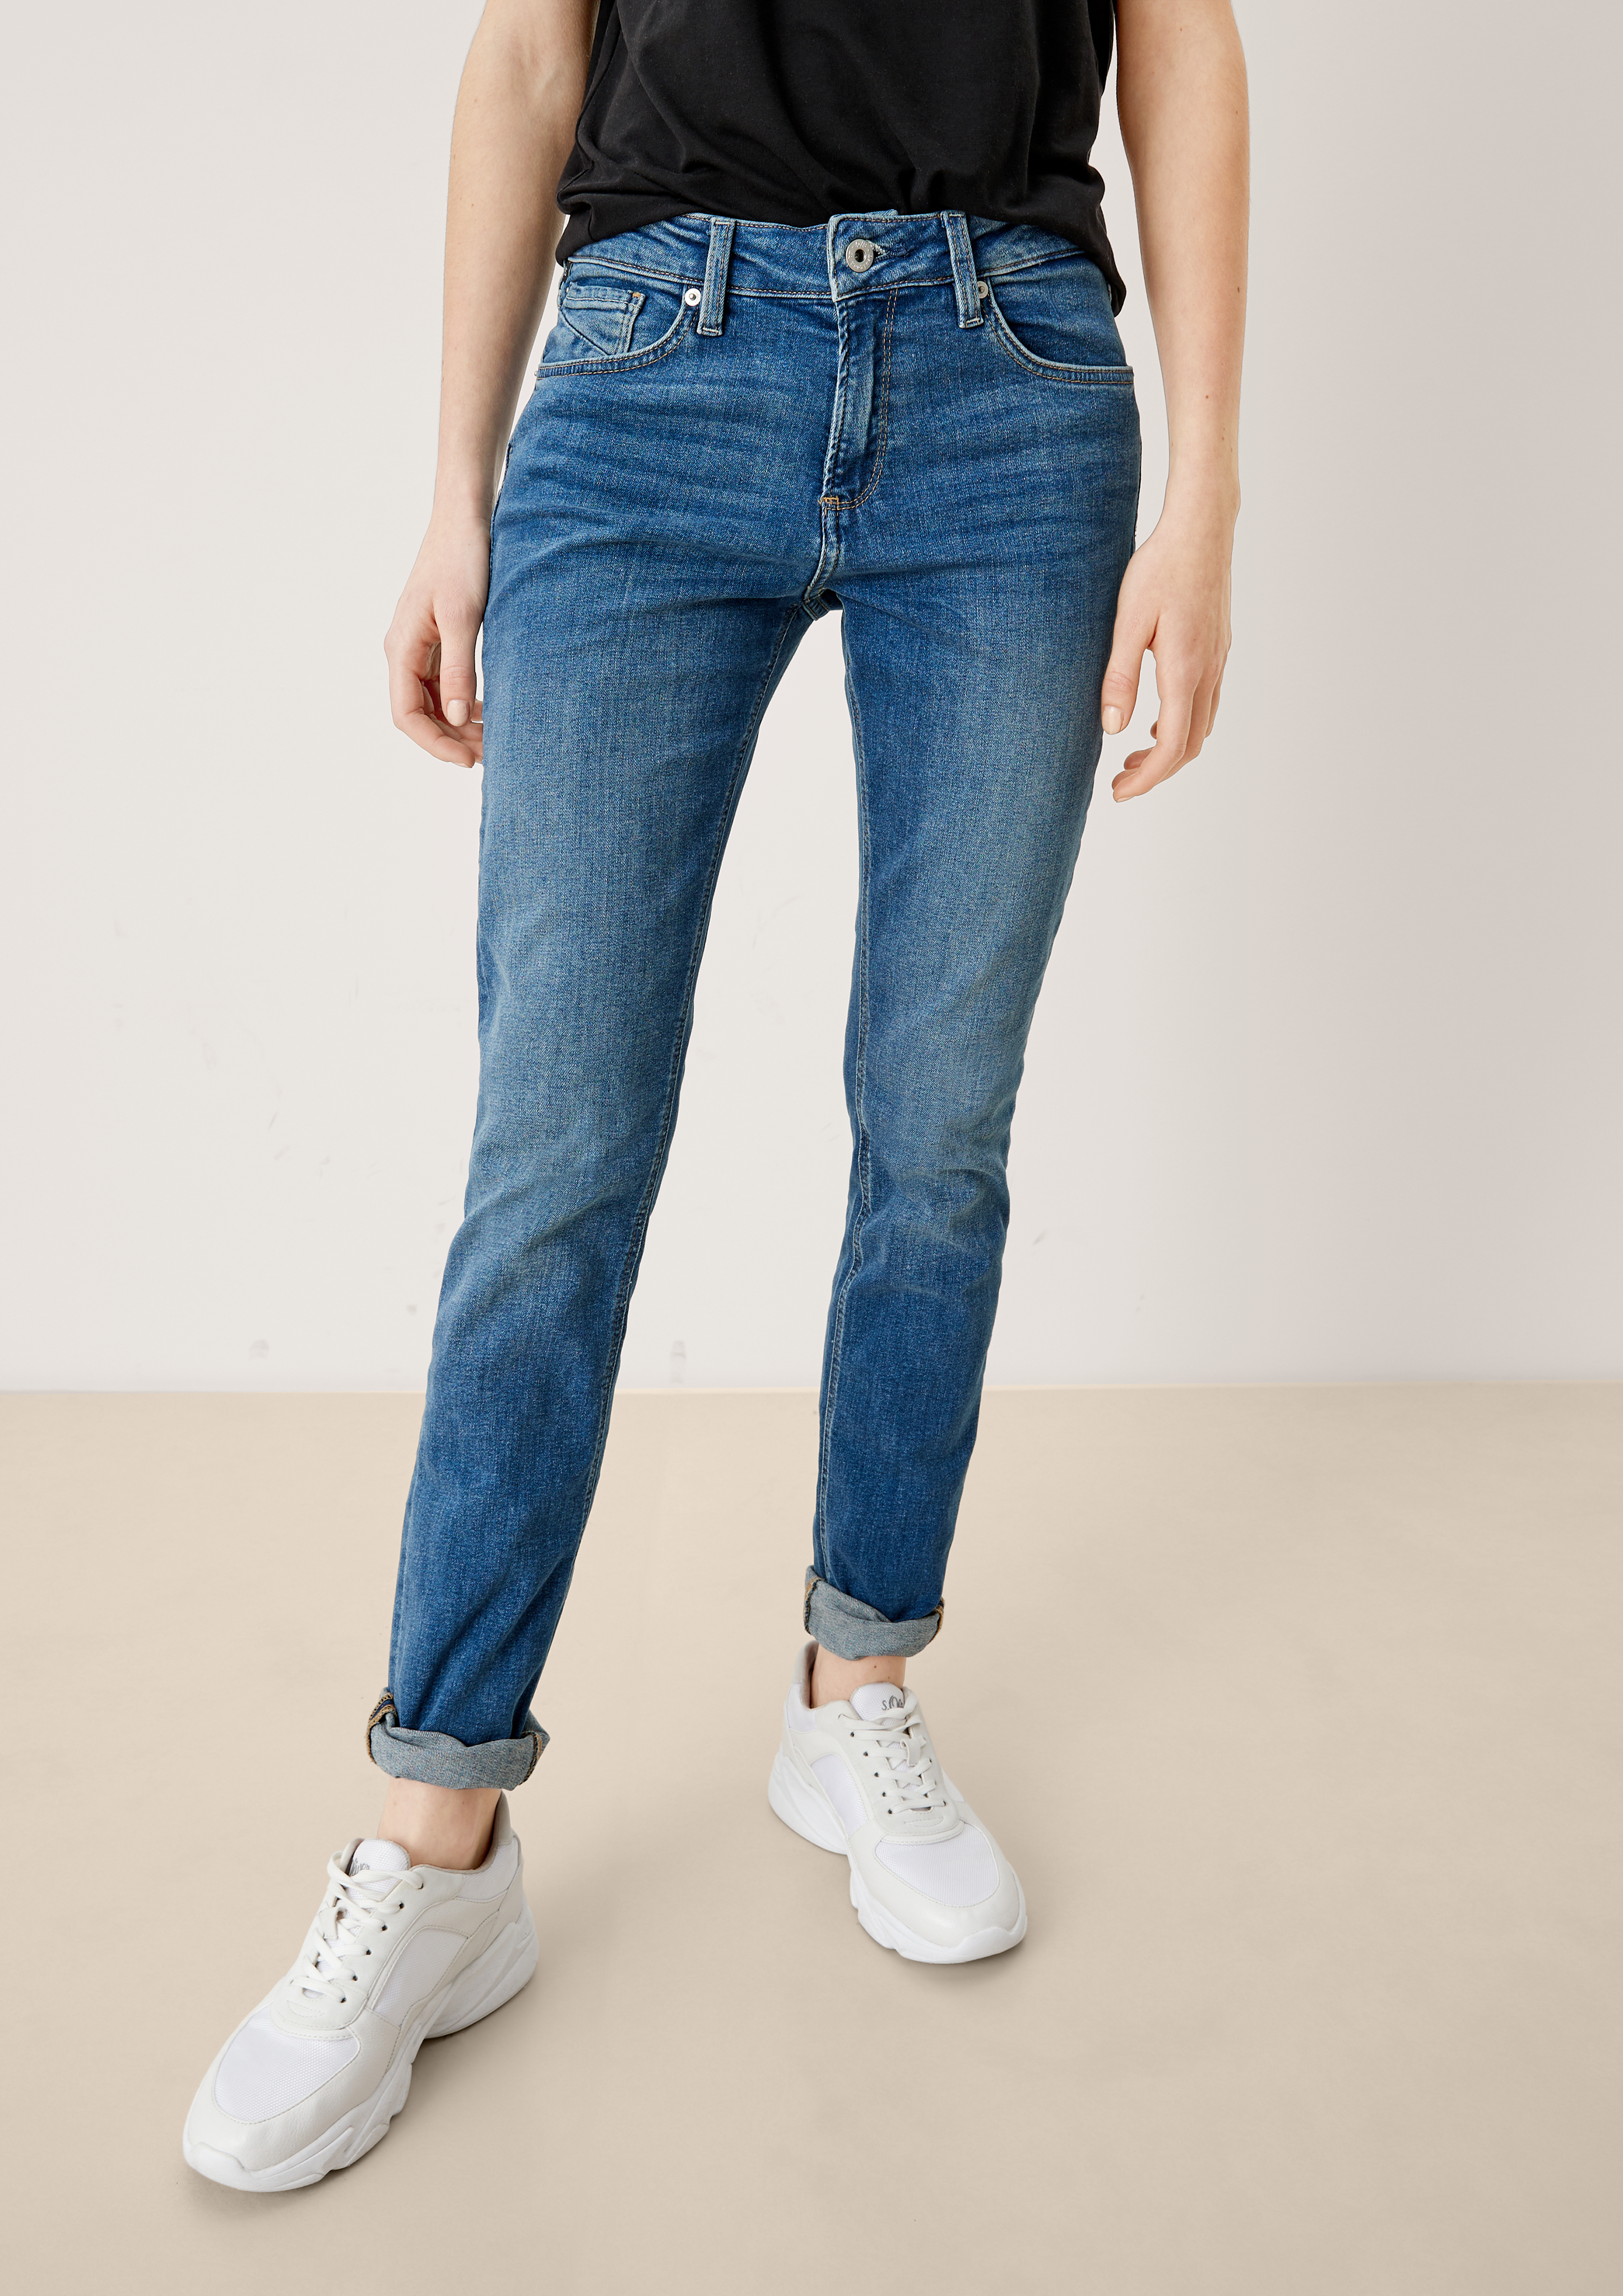 Jeans Catie / / Fit Rise - Slim Leg Slim blau Mid 